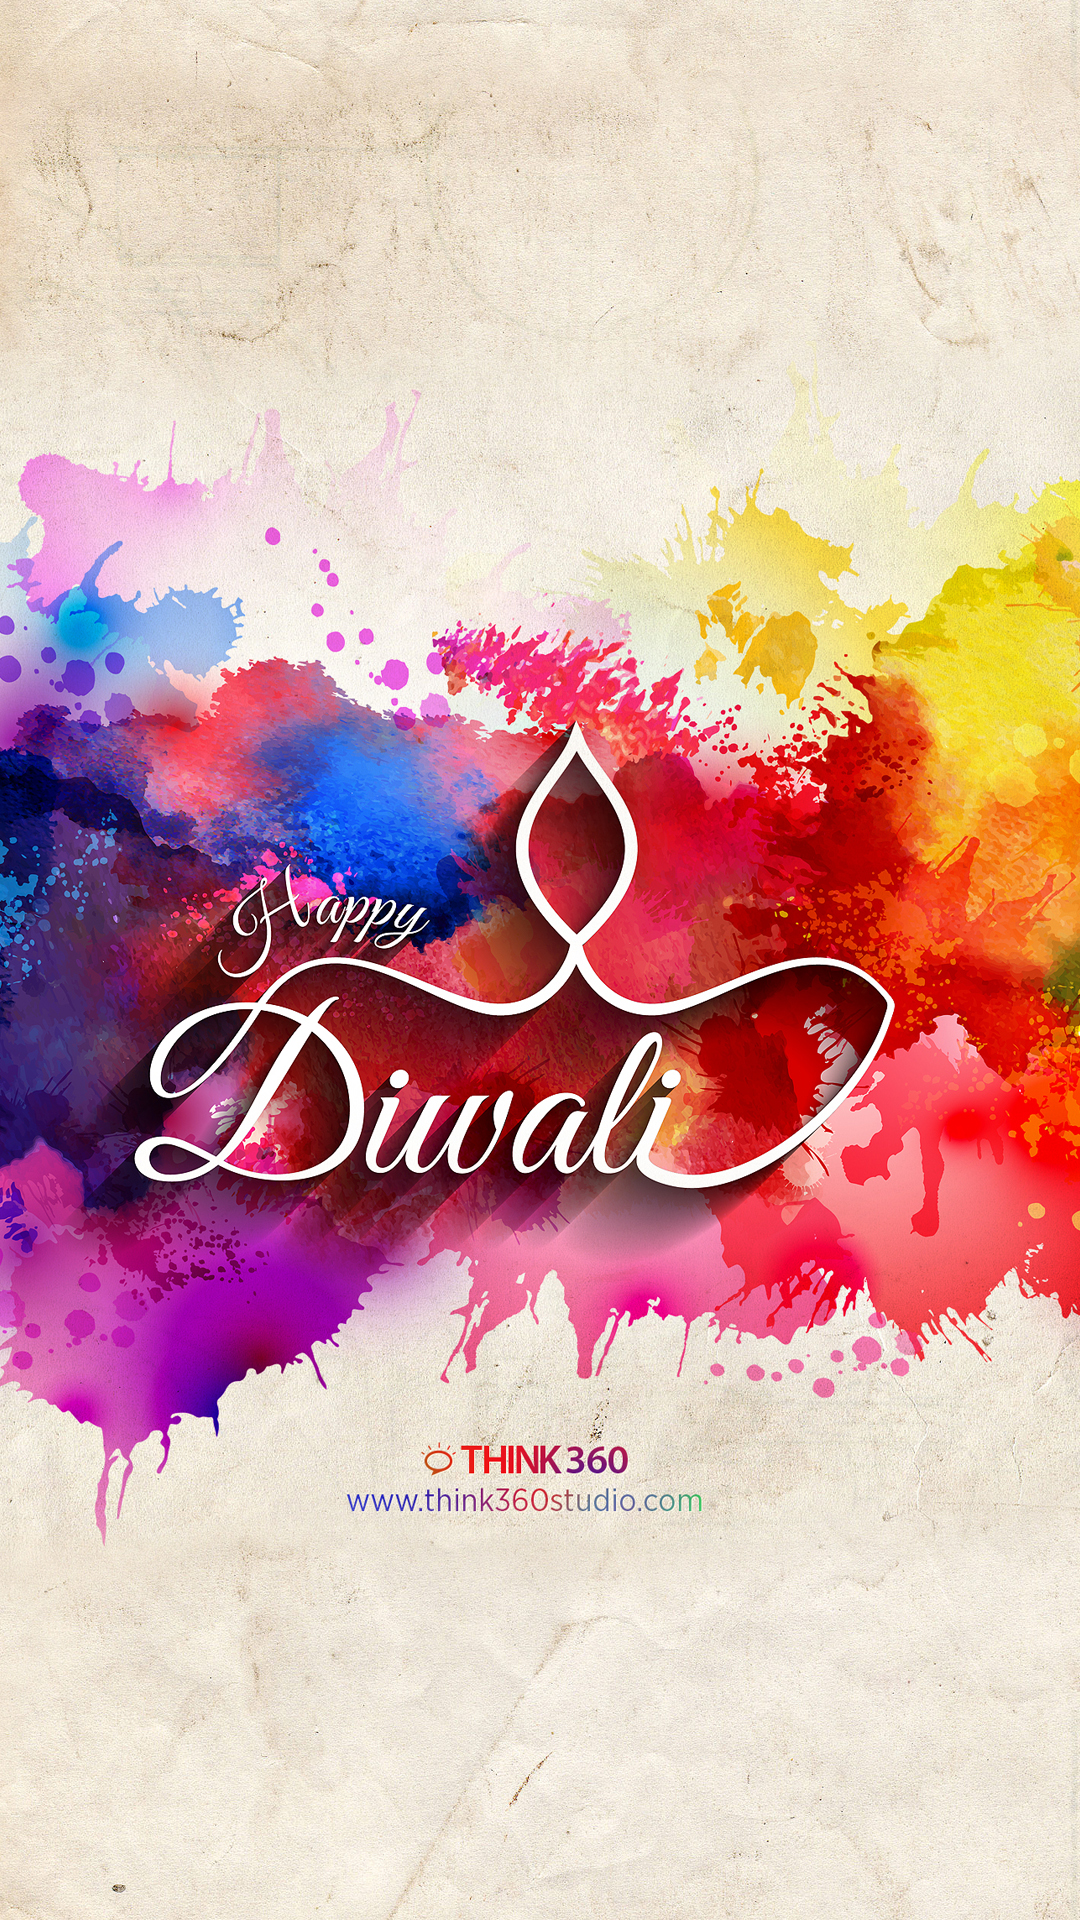 Happy Diwali Colorful Wallpaper 2014 By Prince Pal